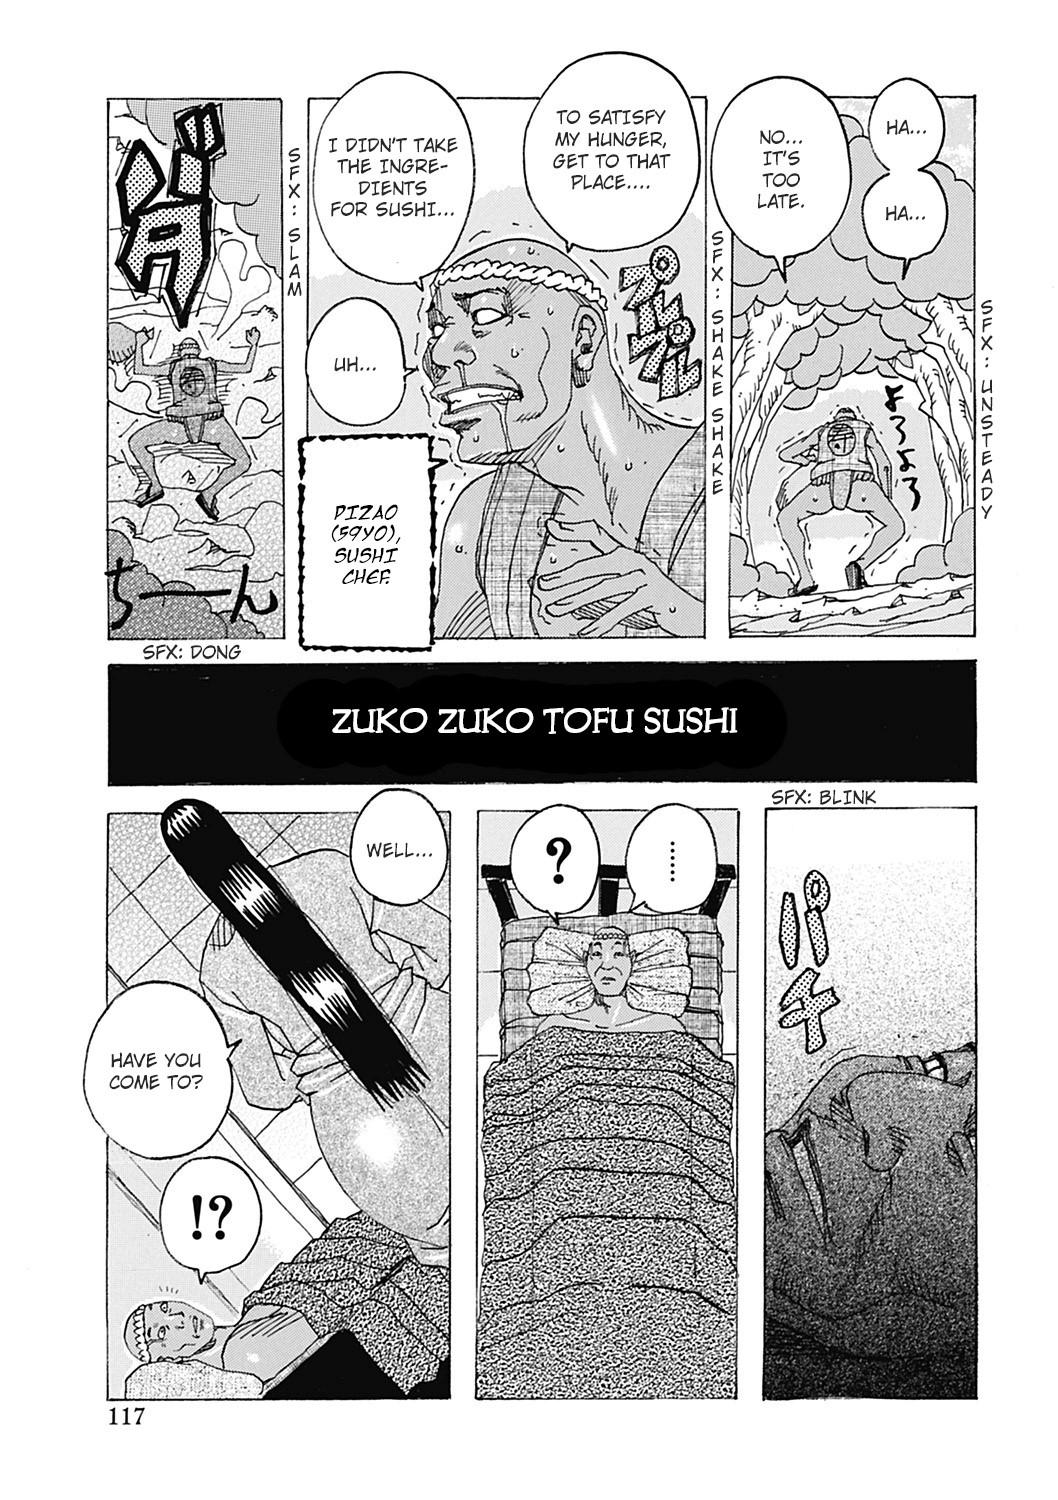 Friends Zukozuko Tofu Sushi Amatuer - Page 1